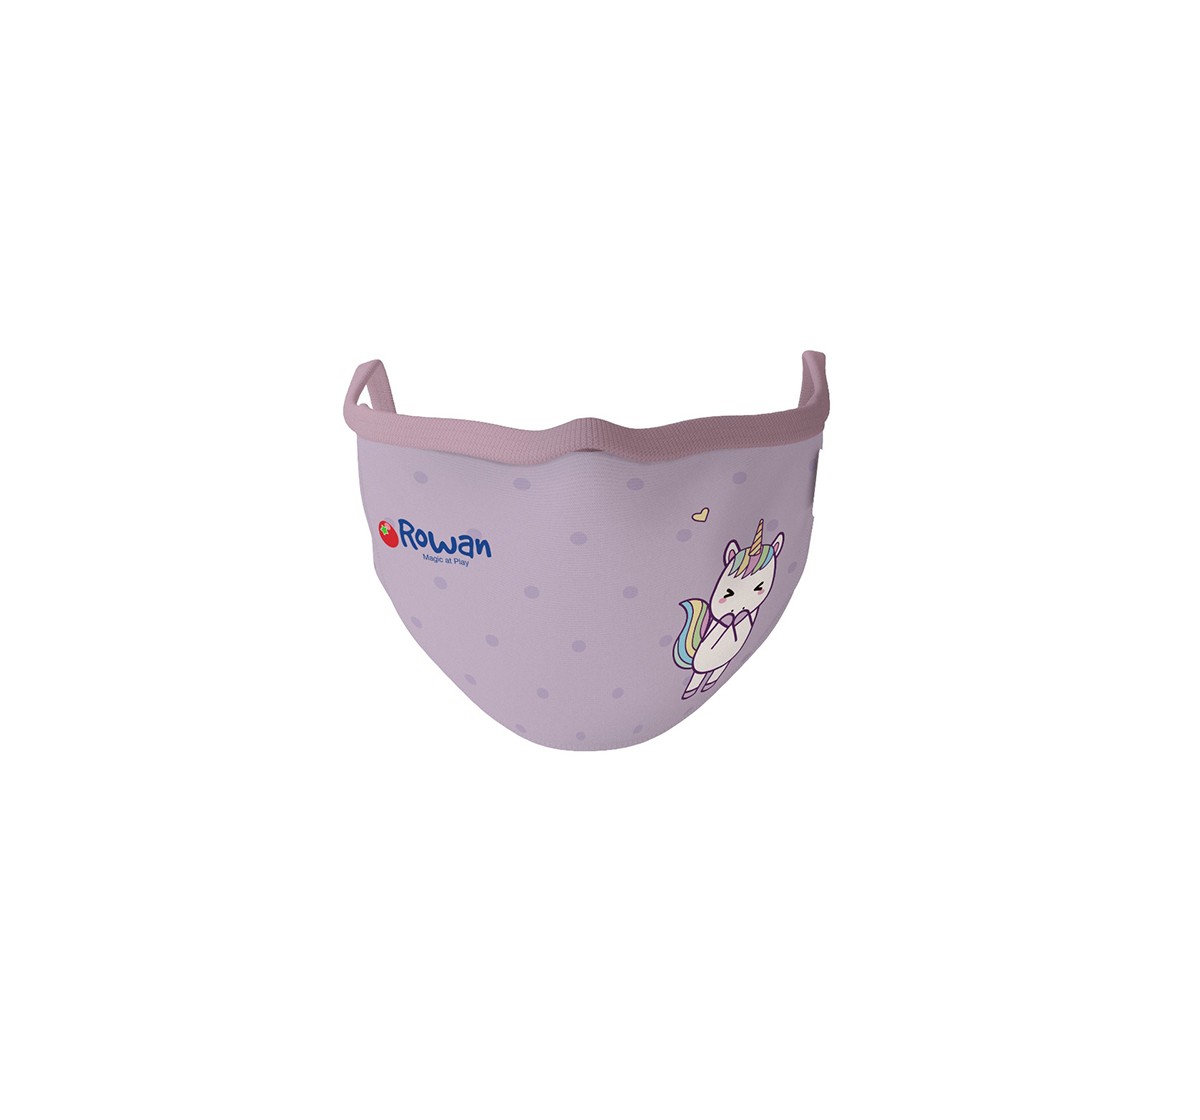 Rowan Unicorn Face Mask - Pack Of 1 Impulse Toys for Kids Age 4Y+ (Purple)